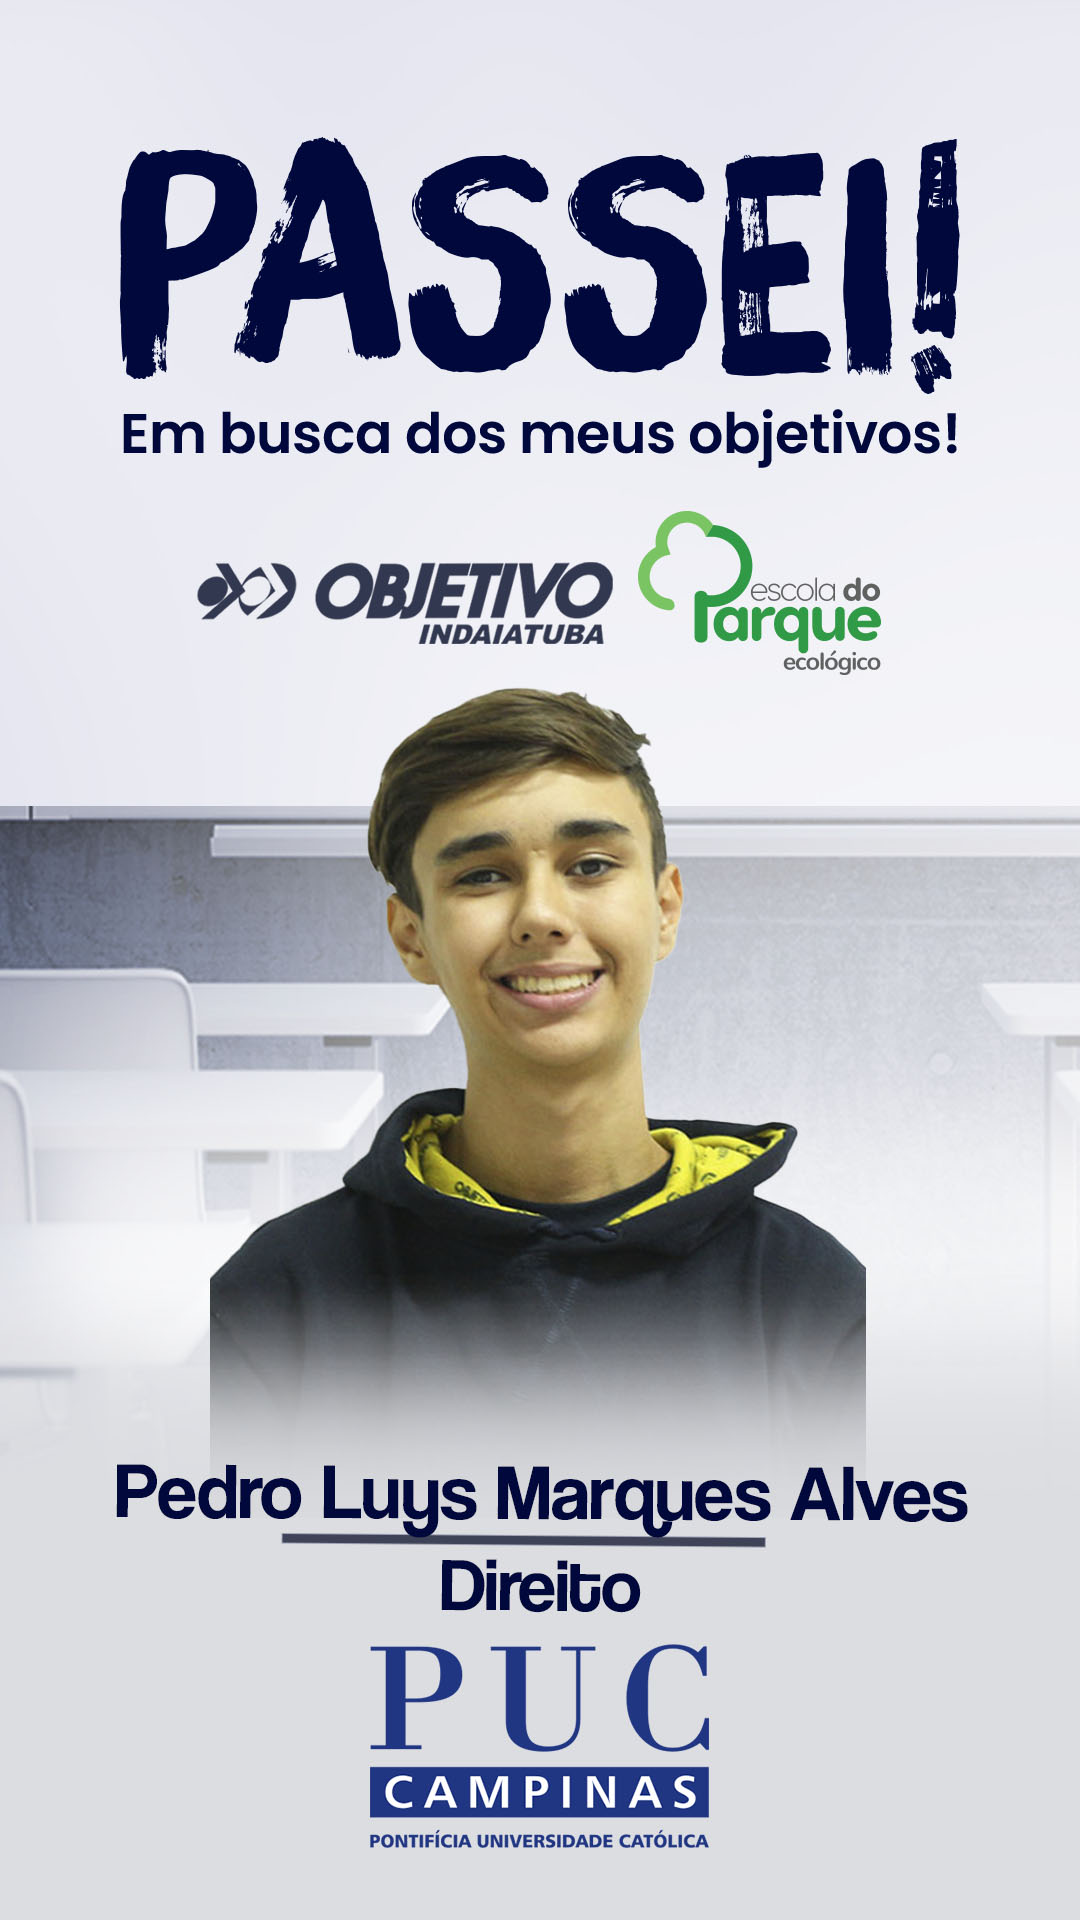 Pedro Luys Marques Alves